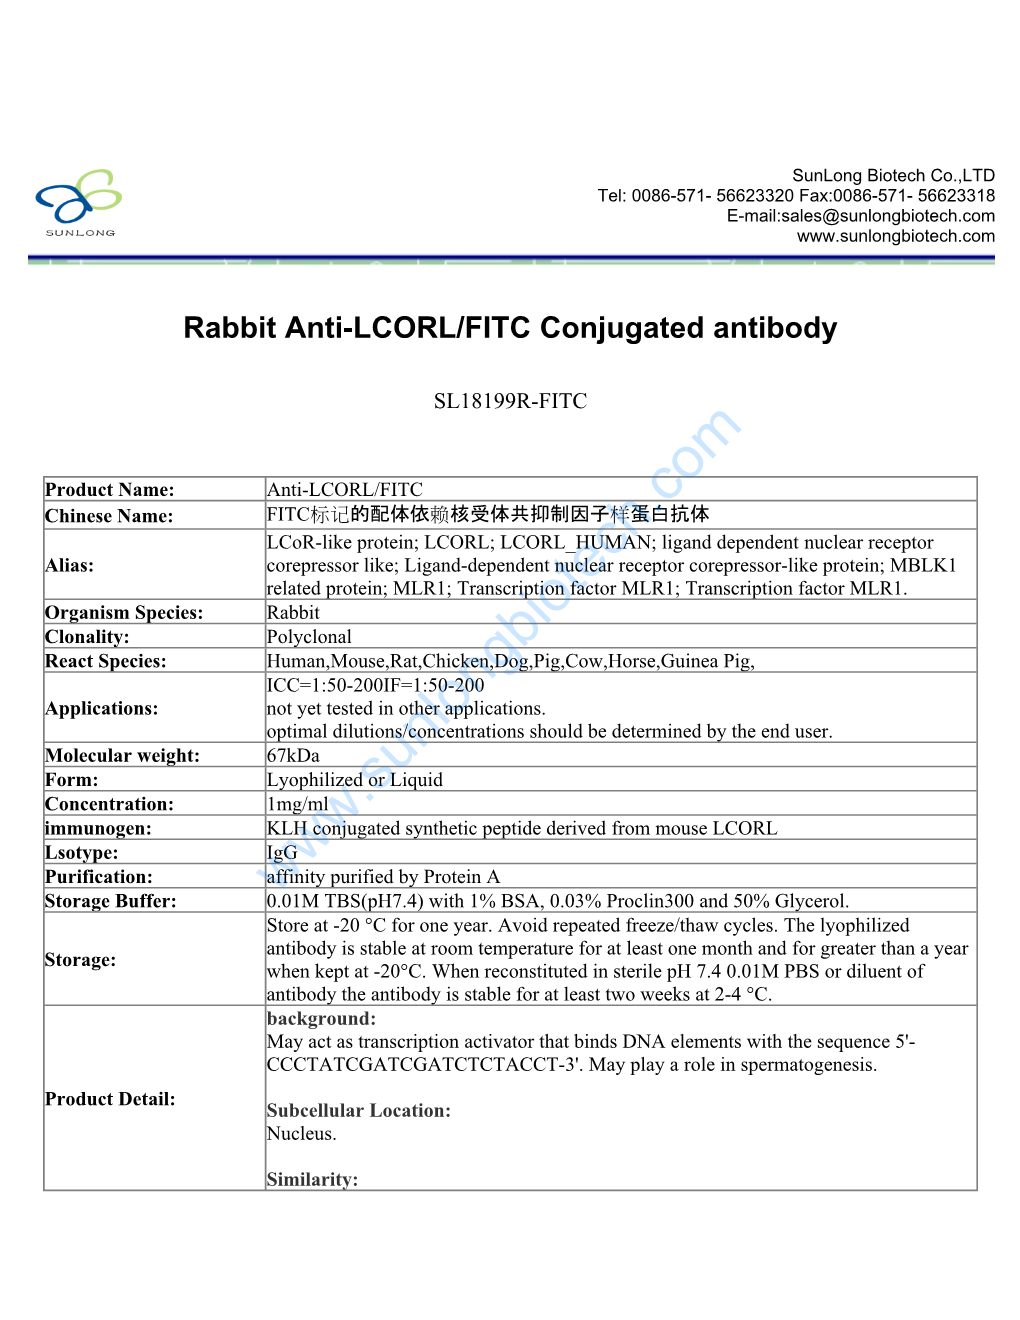 Rabbit Anti-LCORL/FITC Conjugated Antibody-SL18199R-FITC